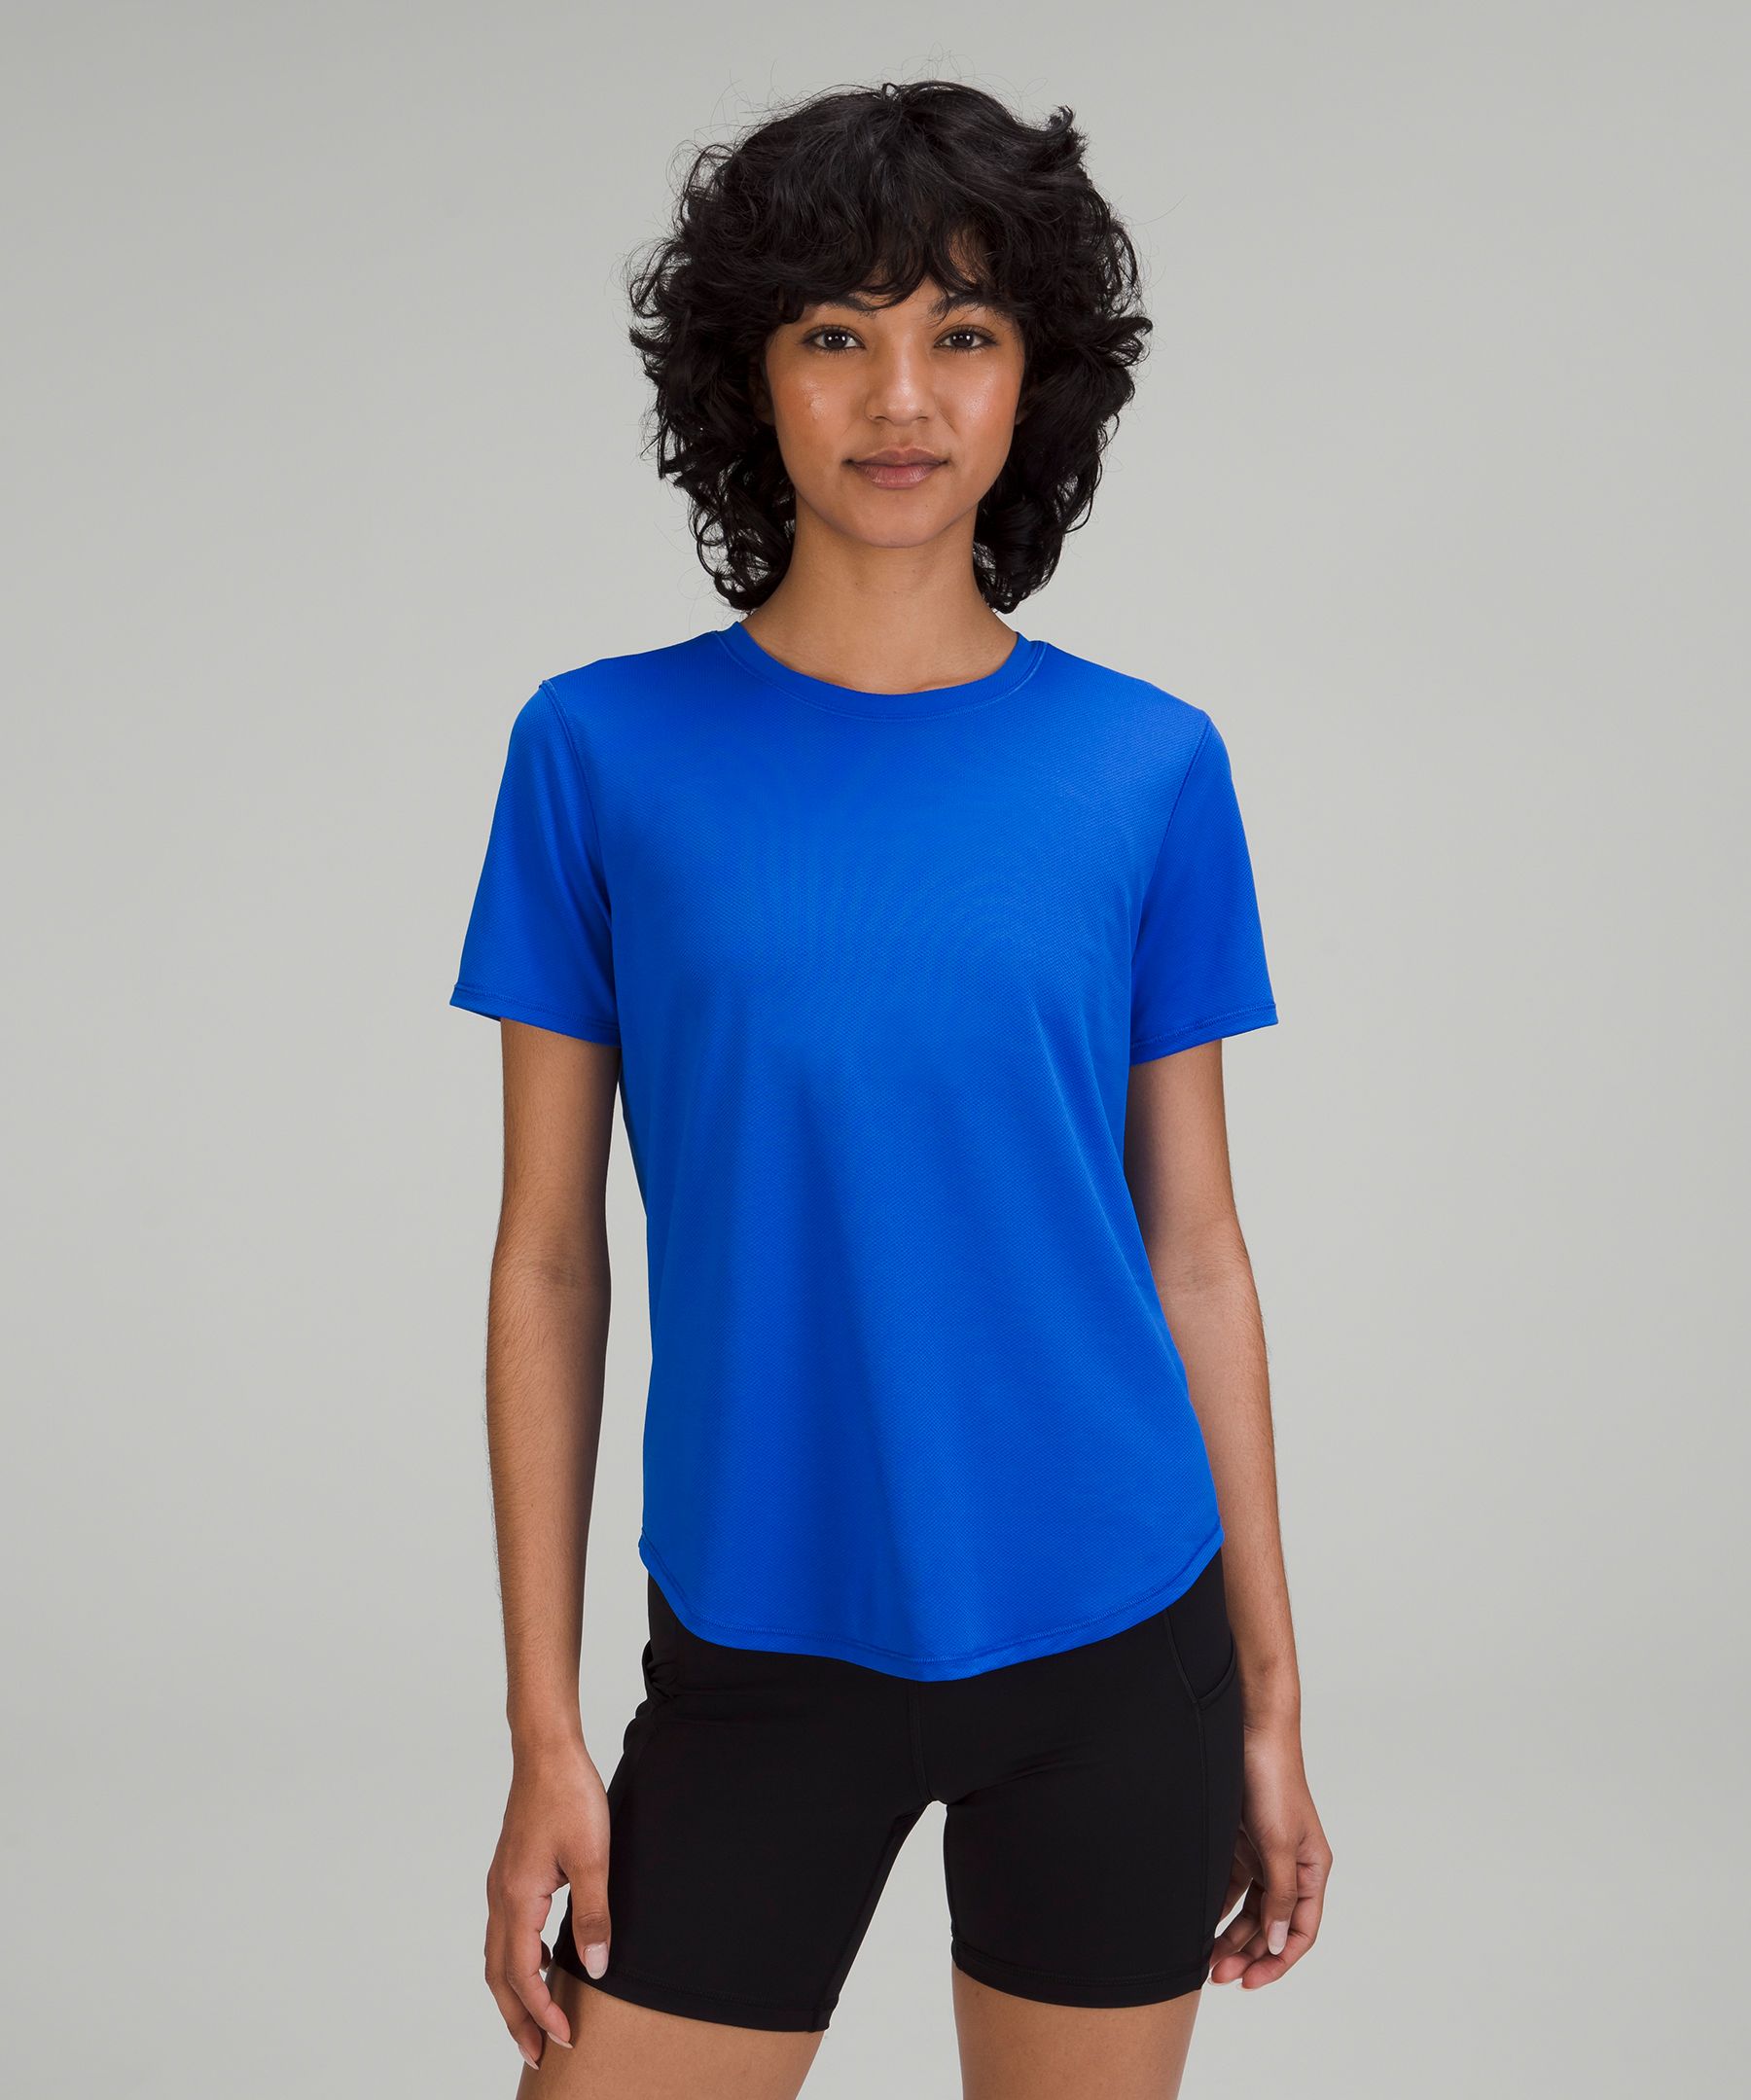 Lululemon High-neck Running And Training T-shirt In Blazer Blue